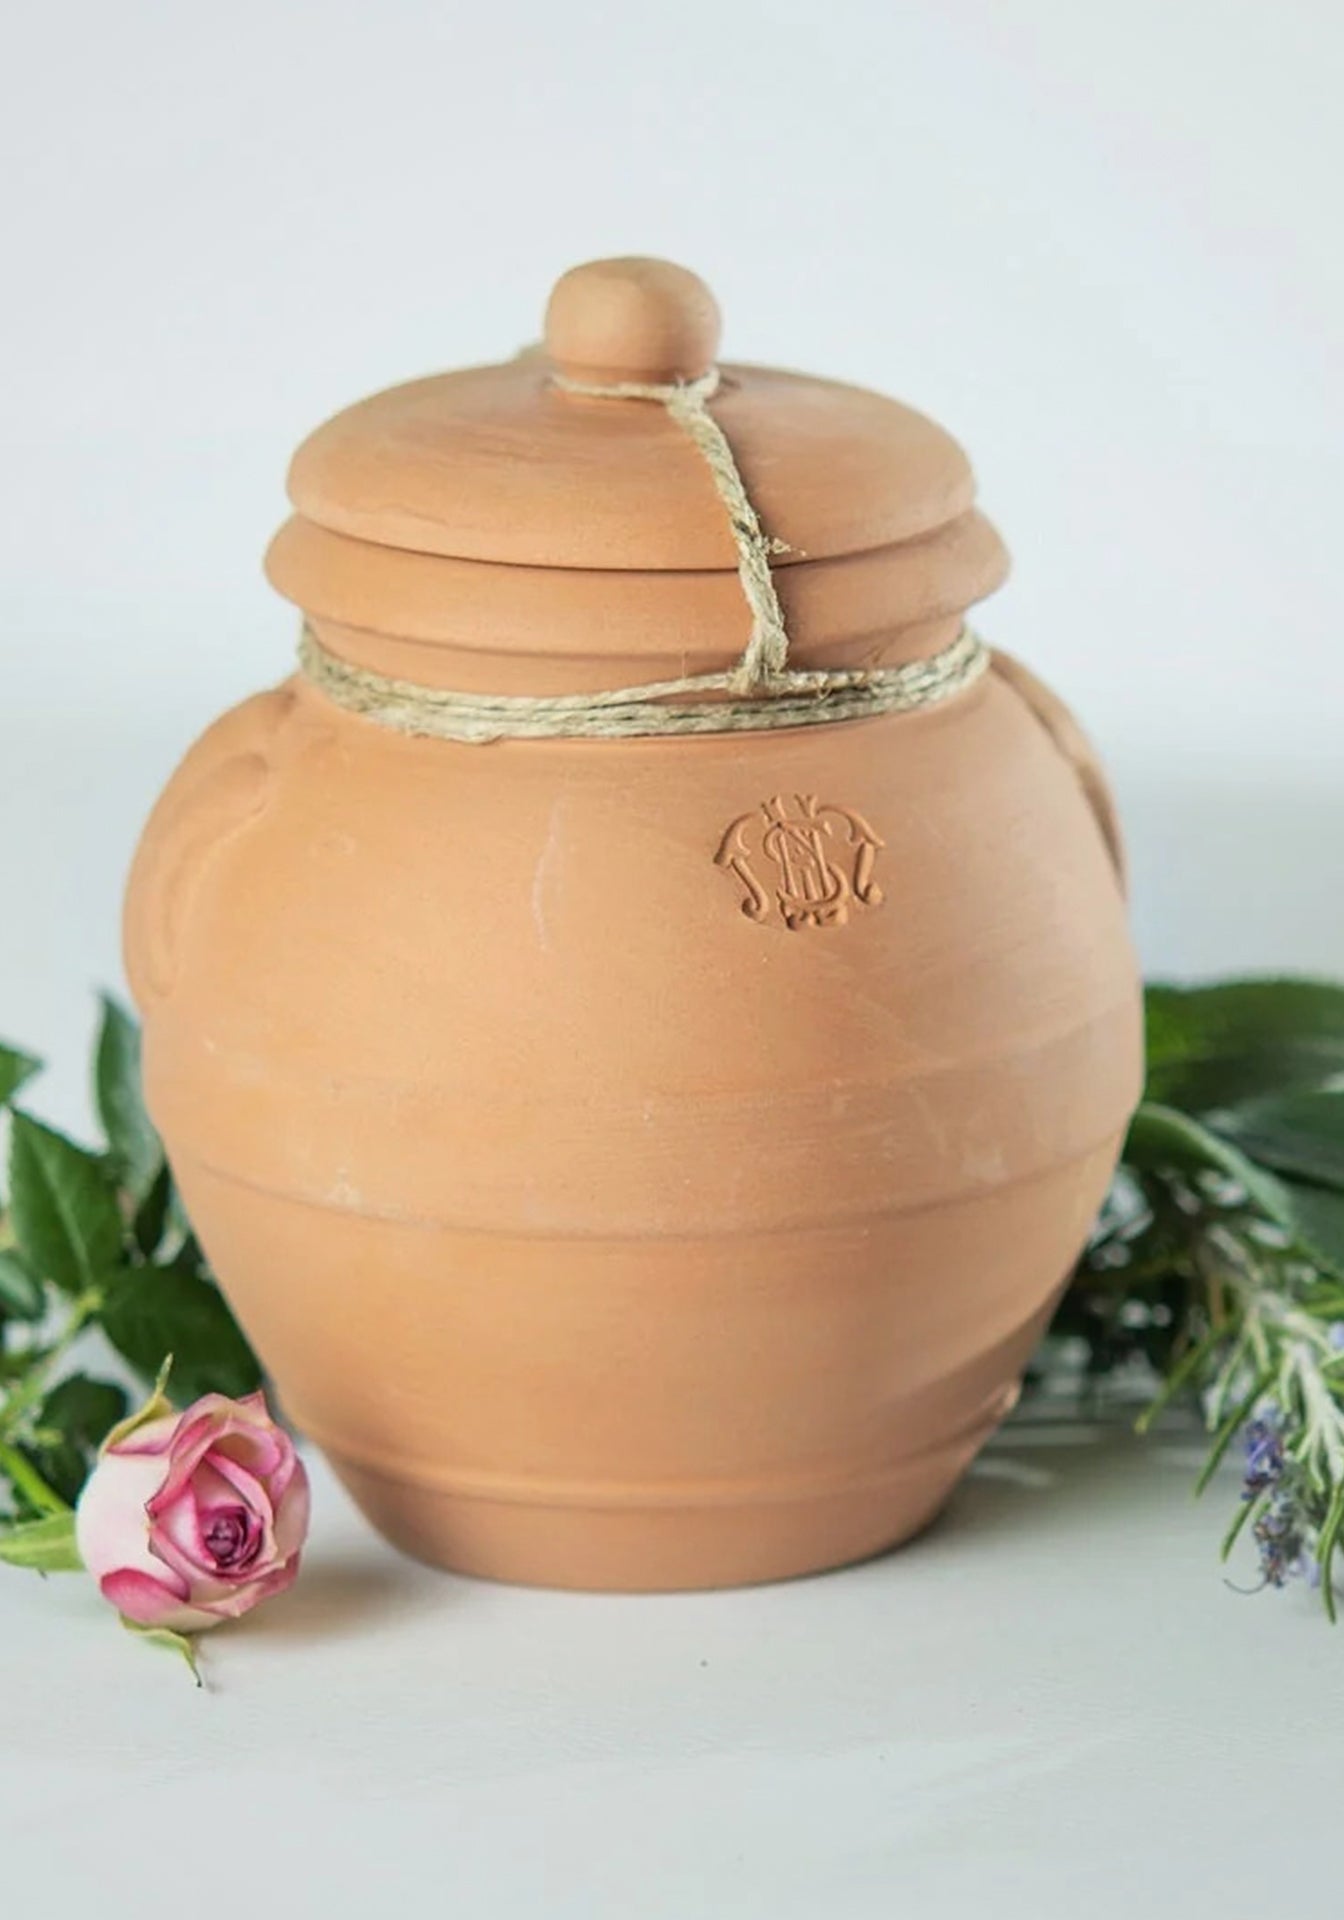 Santa Maria Novella Pot Pourri in Terracotta Jar (Large) (150 g) –  Smallflower